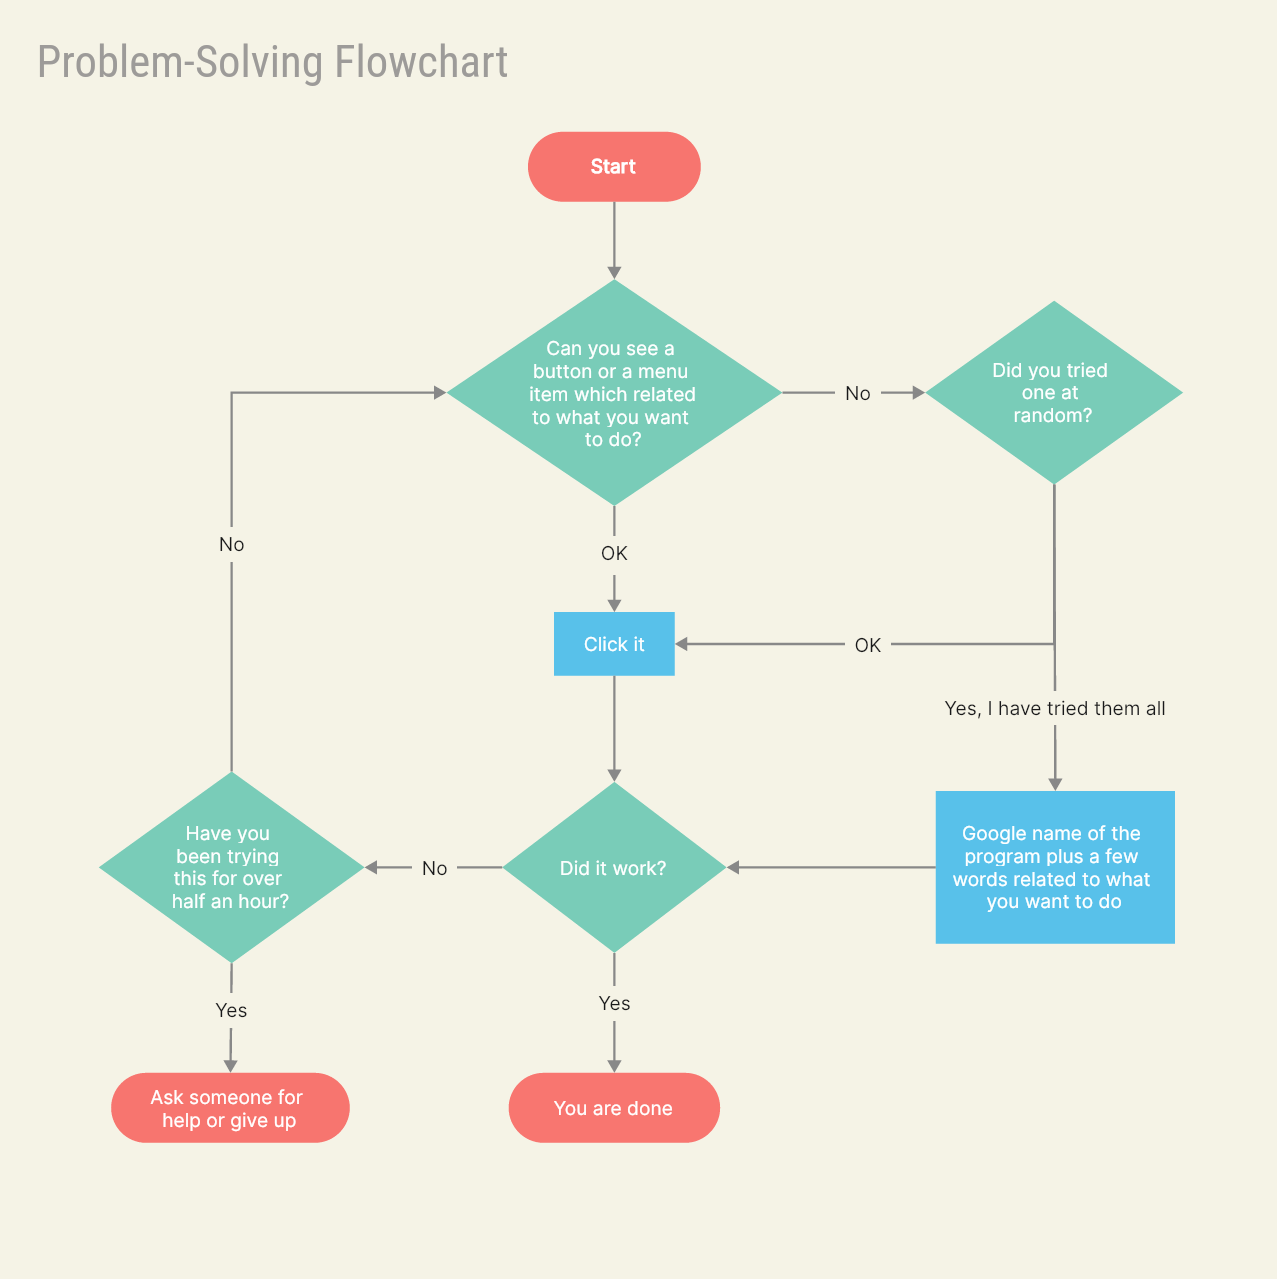 2. Problem-solving Flowchart